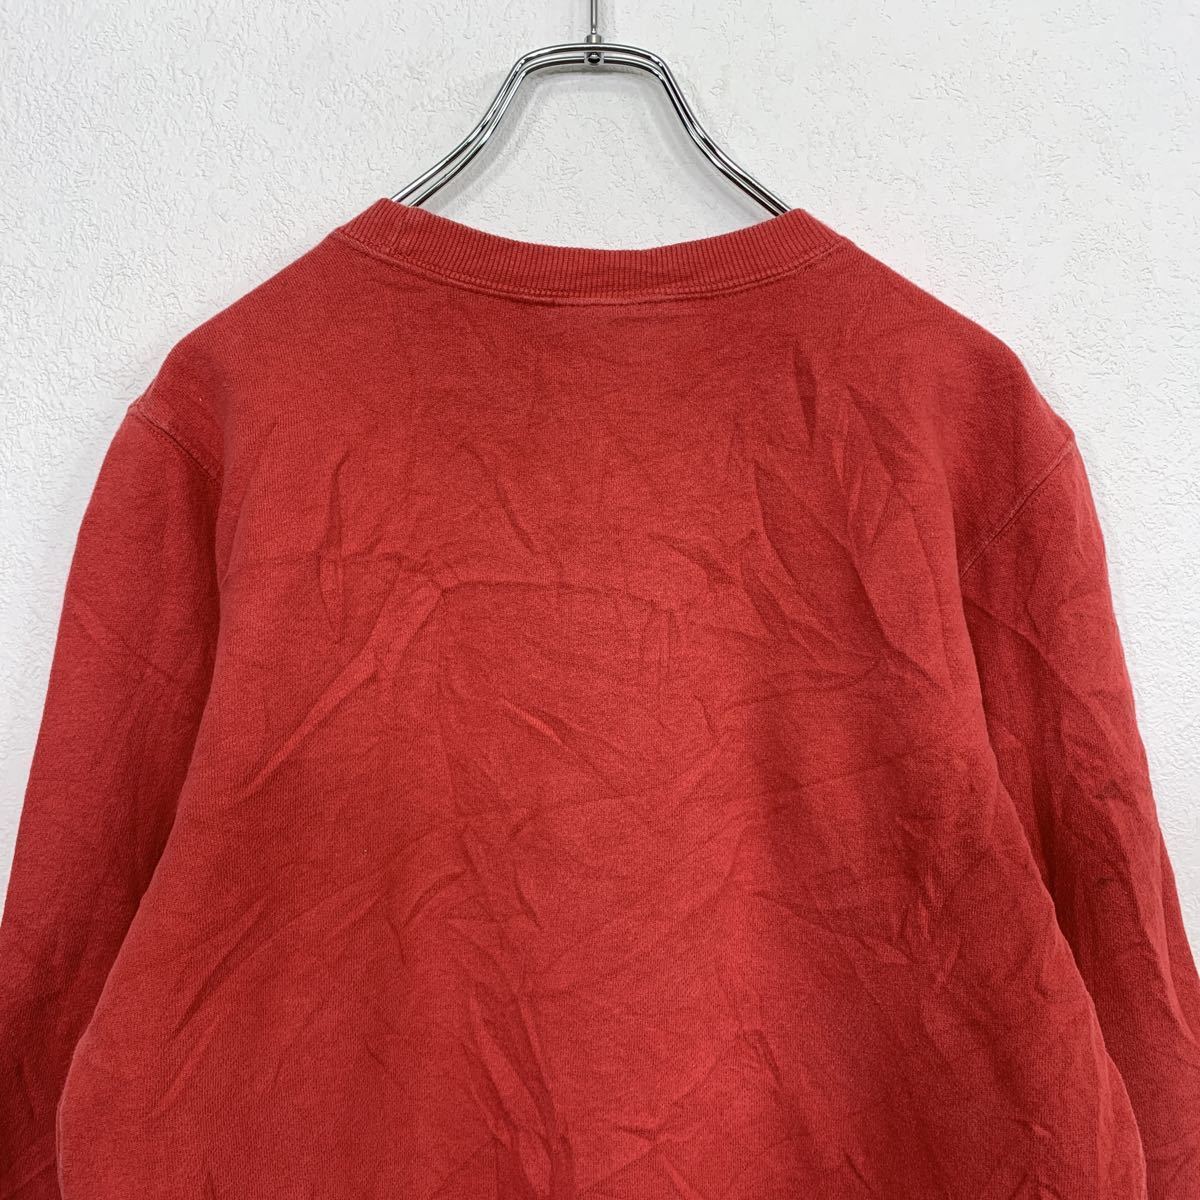 Disney sweat sweatshirt lady's XS scarlet Disney minnie Cara retro old clothes . America buying up t2111-4788